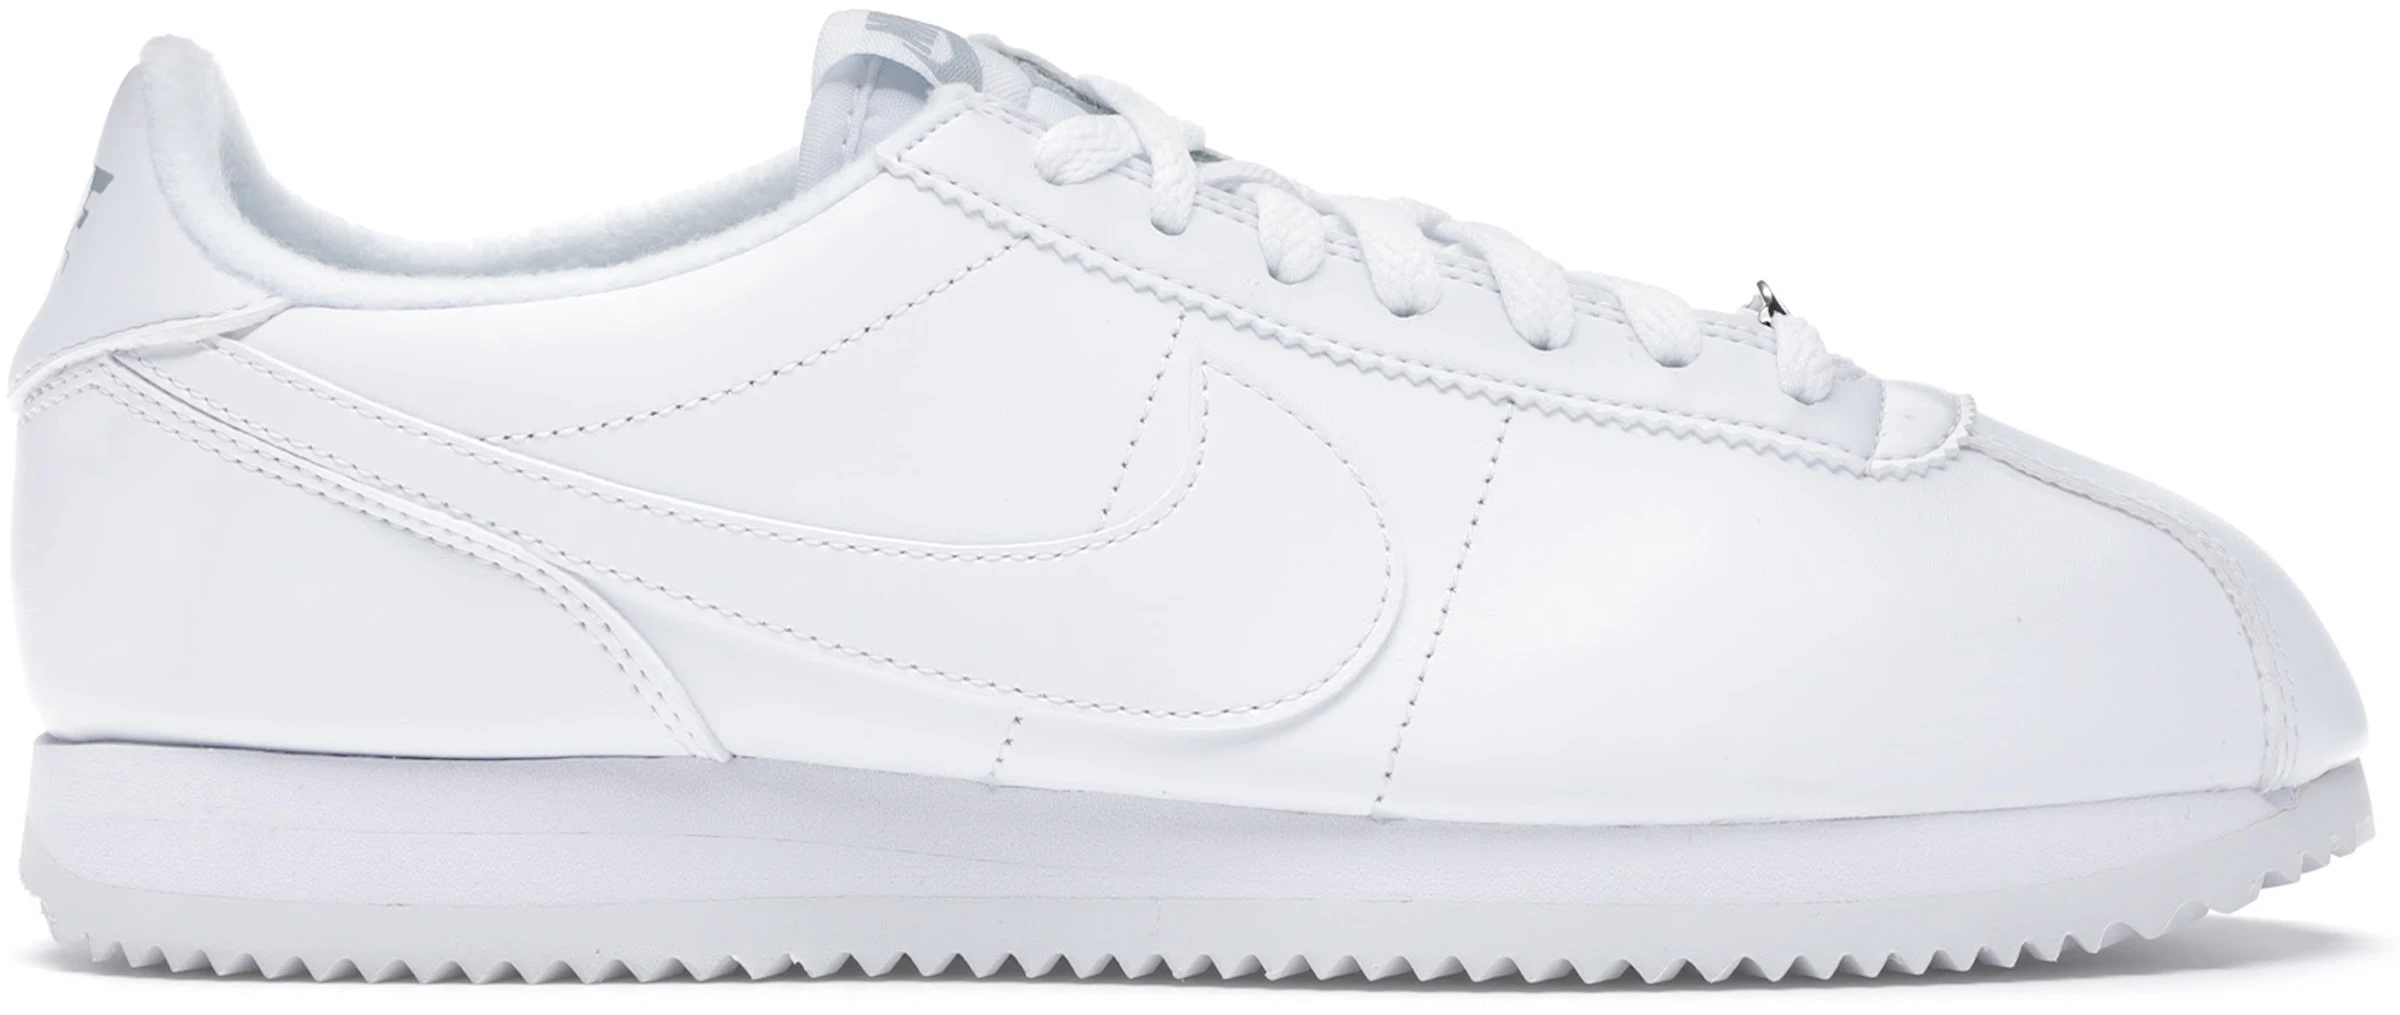 Nike Cortez Basic White Grey-Mtllc Silver - 819719-110 - ES